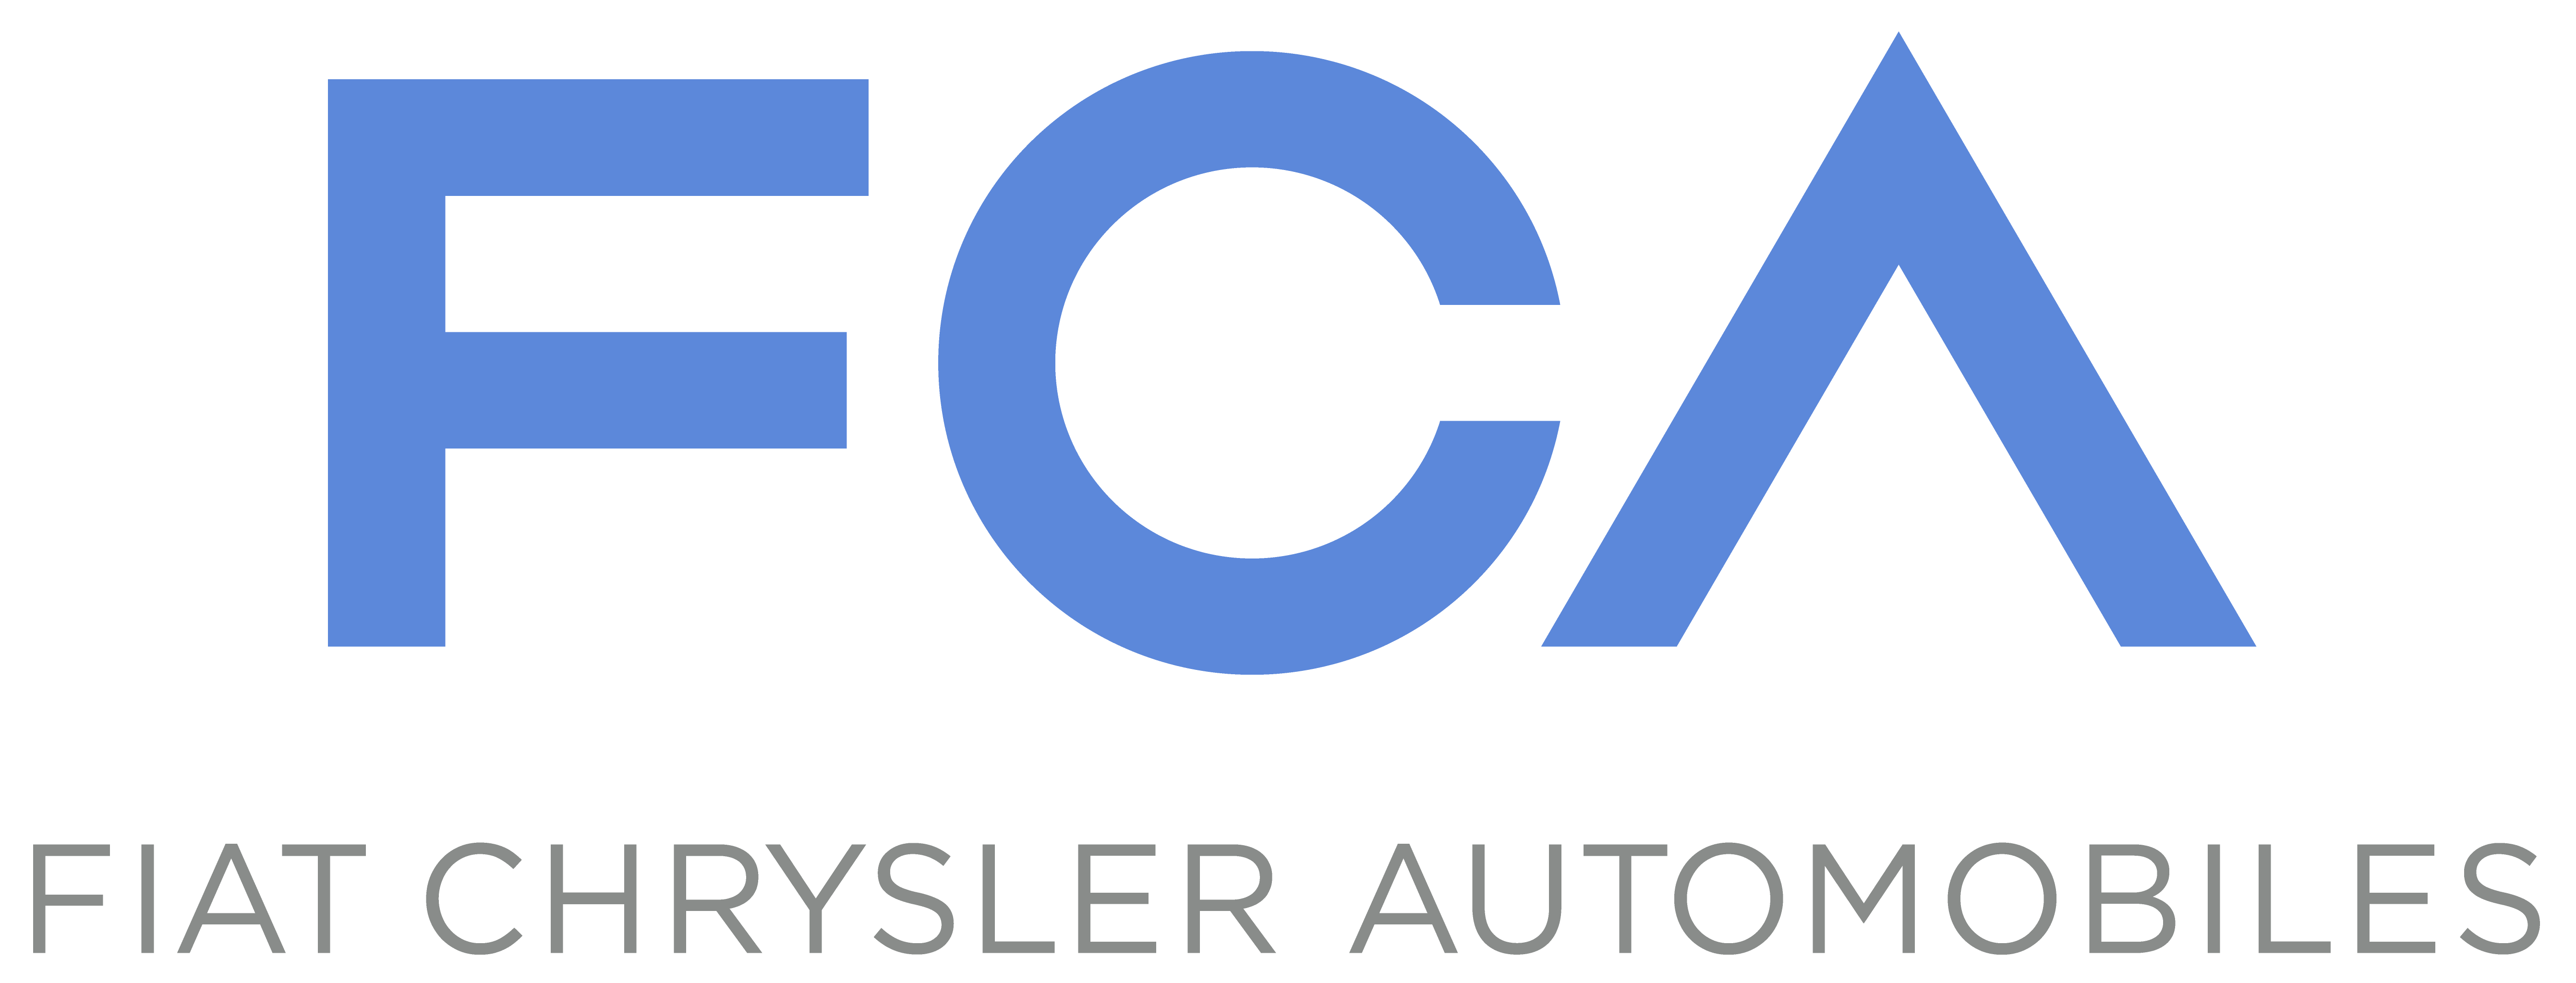 Ford emblem logo vector